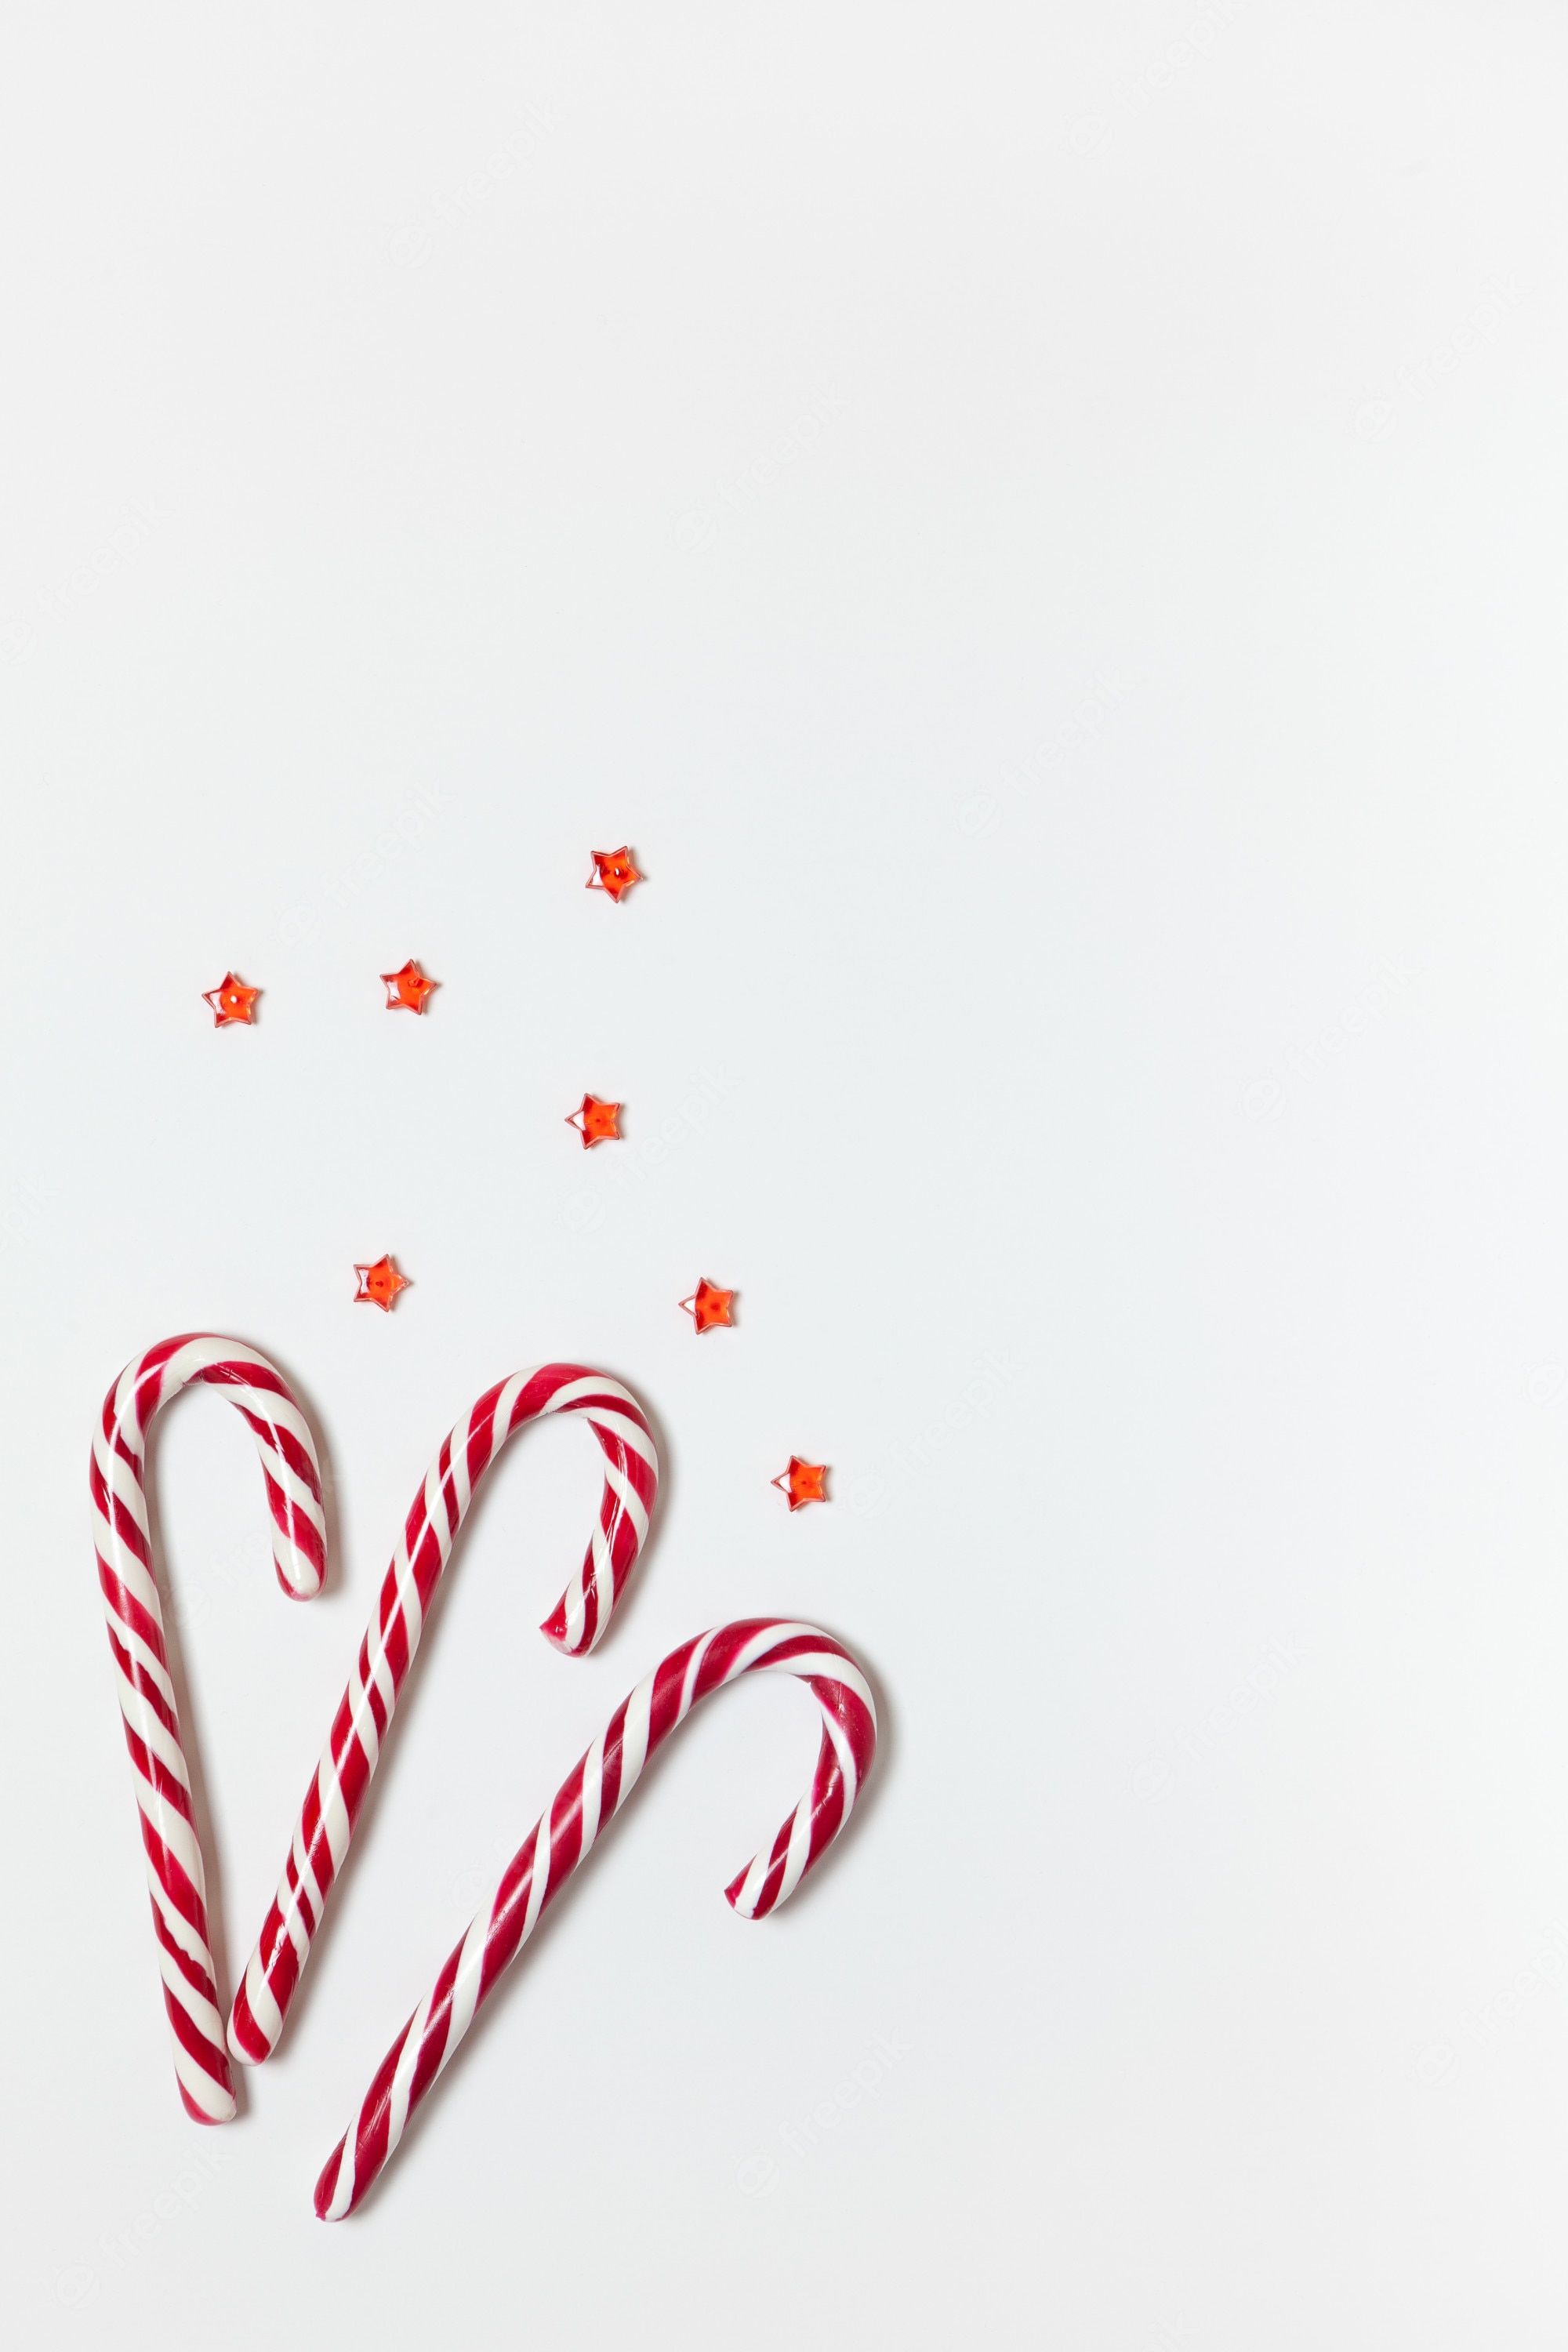 Christmas Background Candy Cane Image